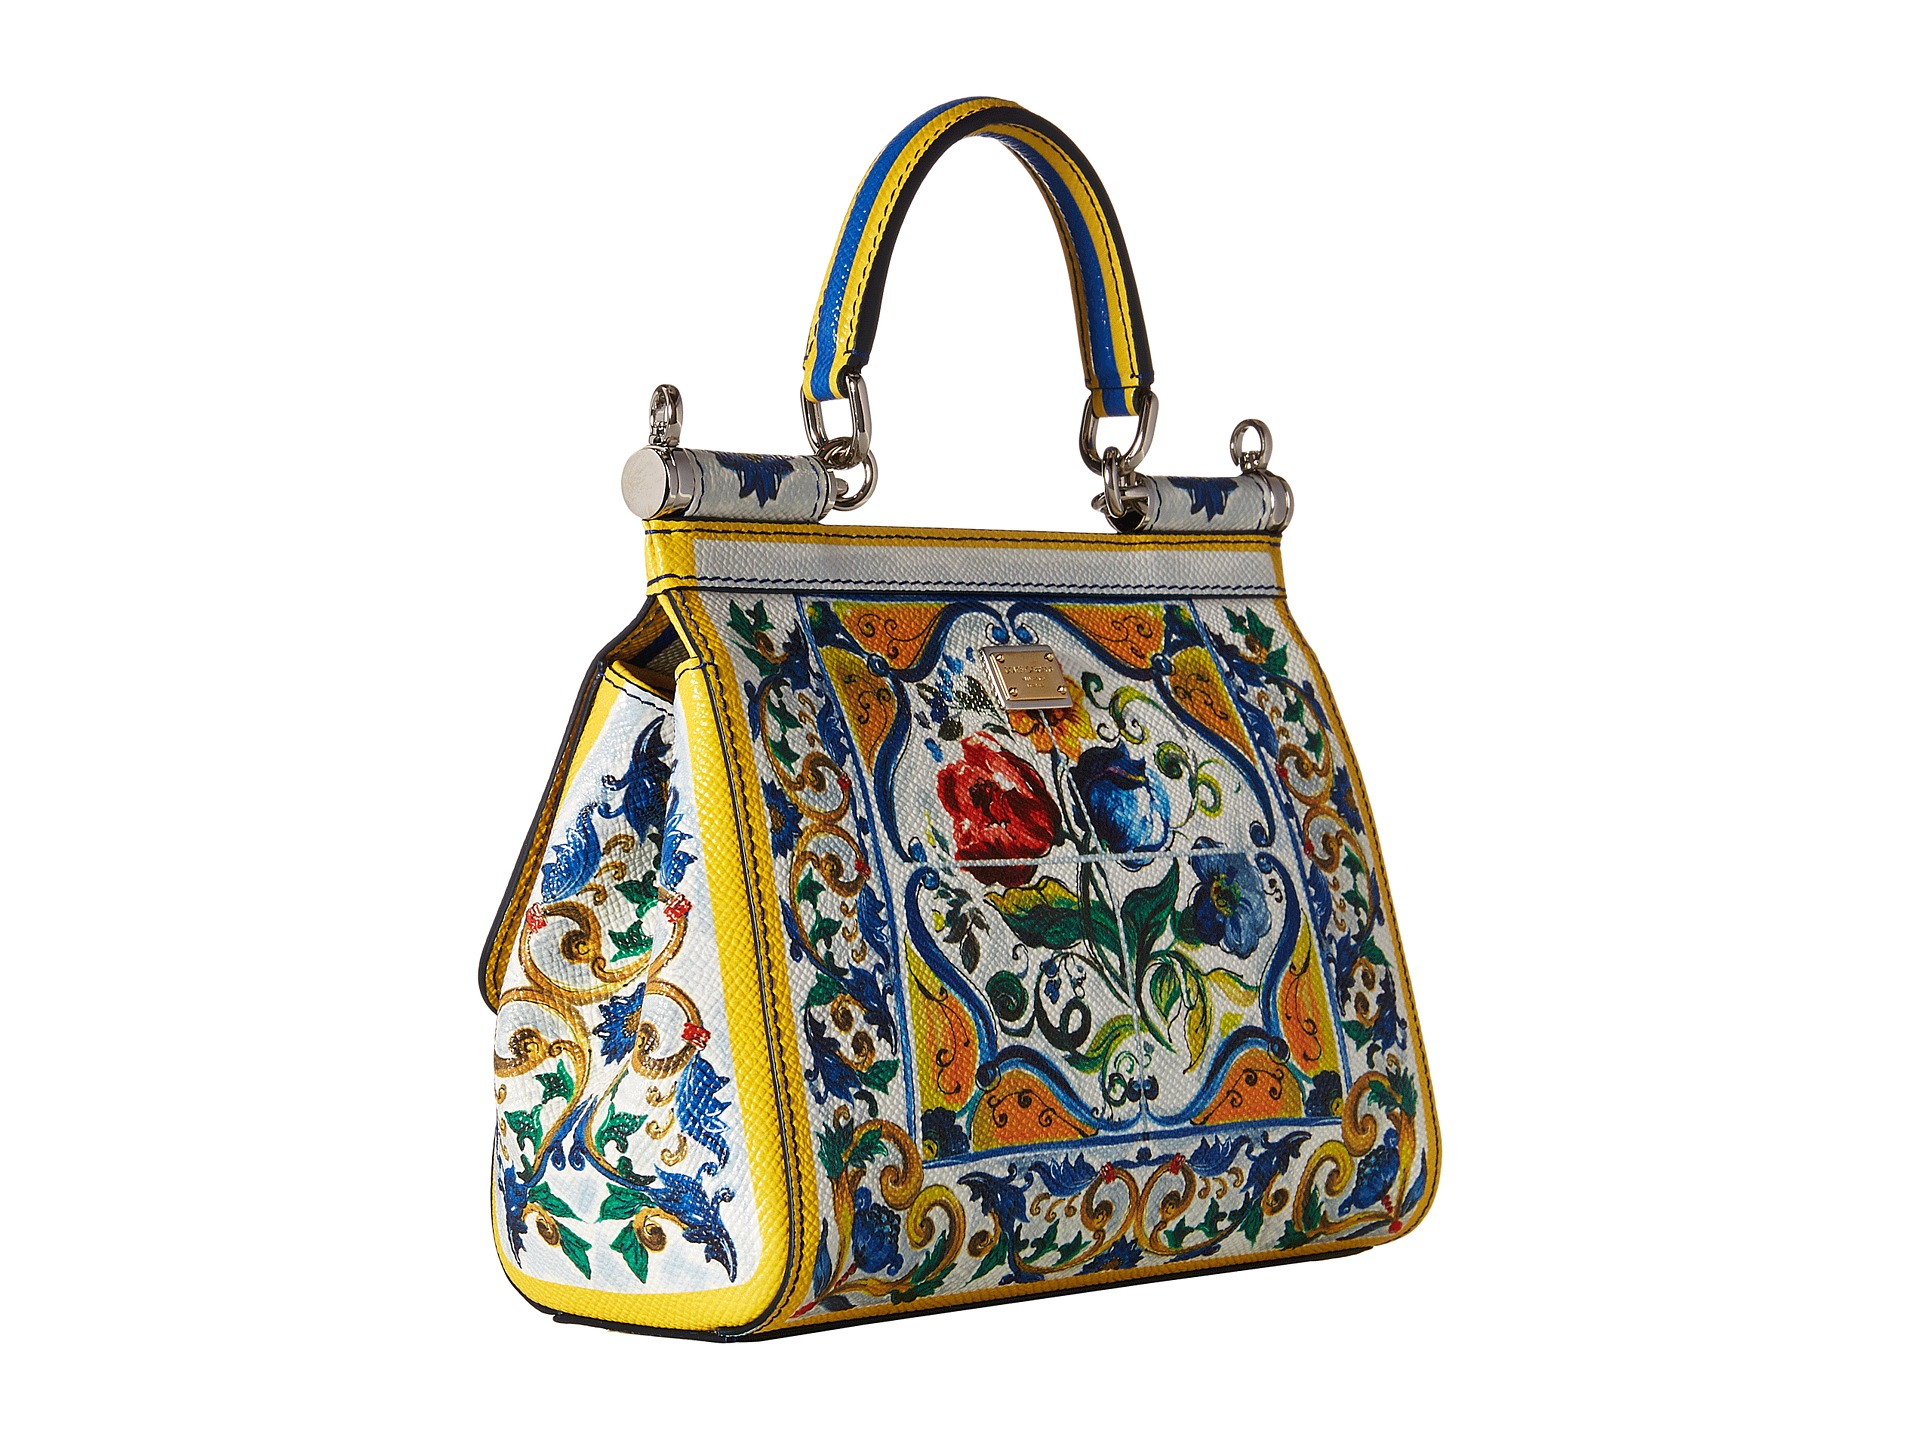 Lyst - Dolce & Gabbana Maiolica Ceramic Print Sicily Bag